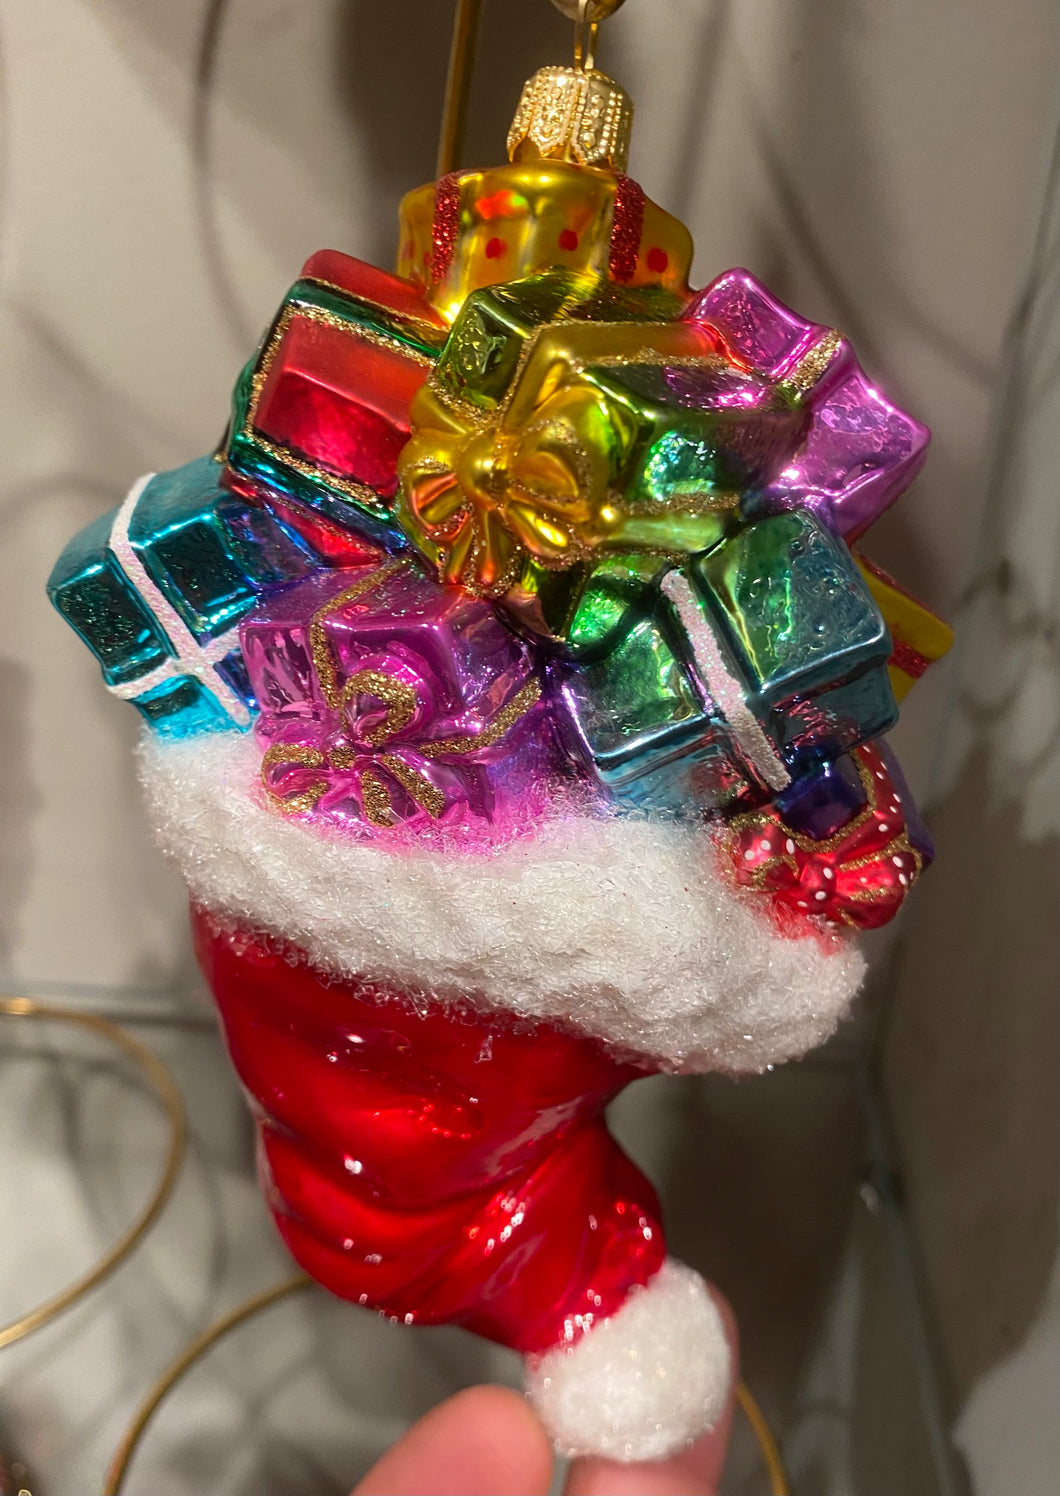 Huras Family Santa's Cap with Presents